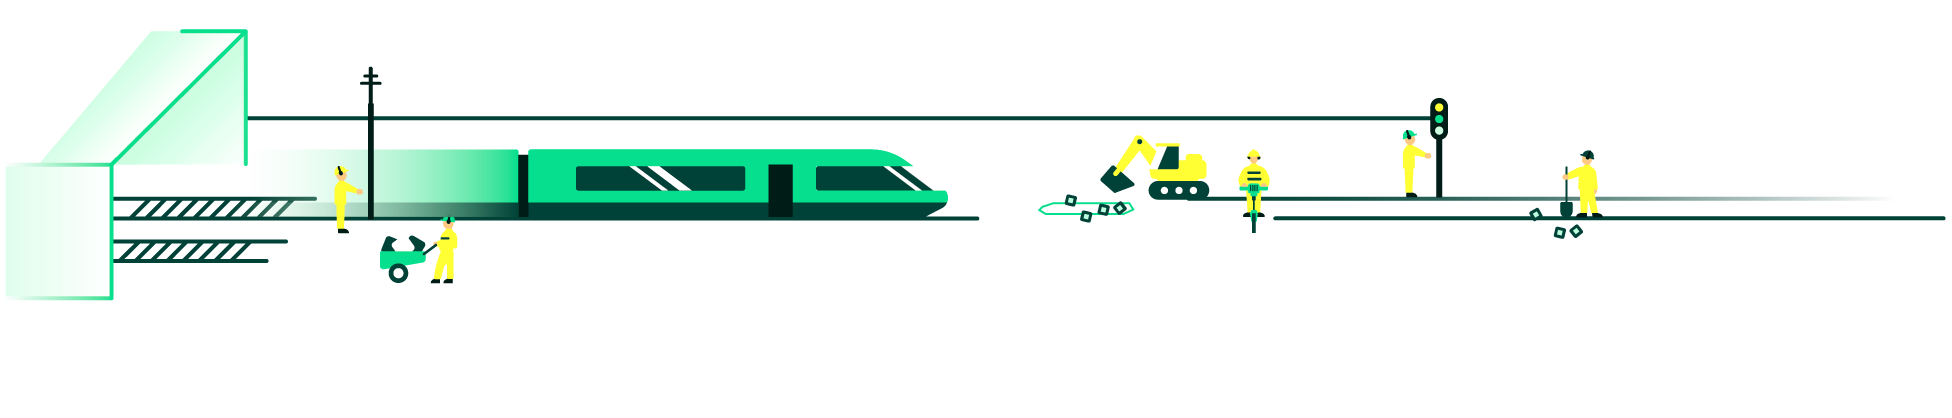 Train illustration